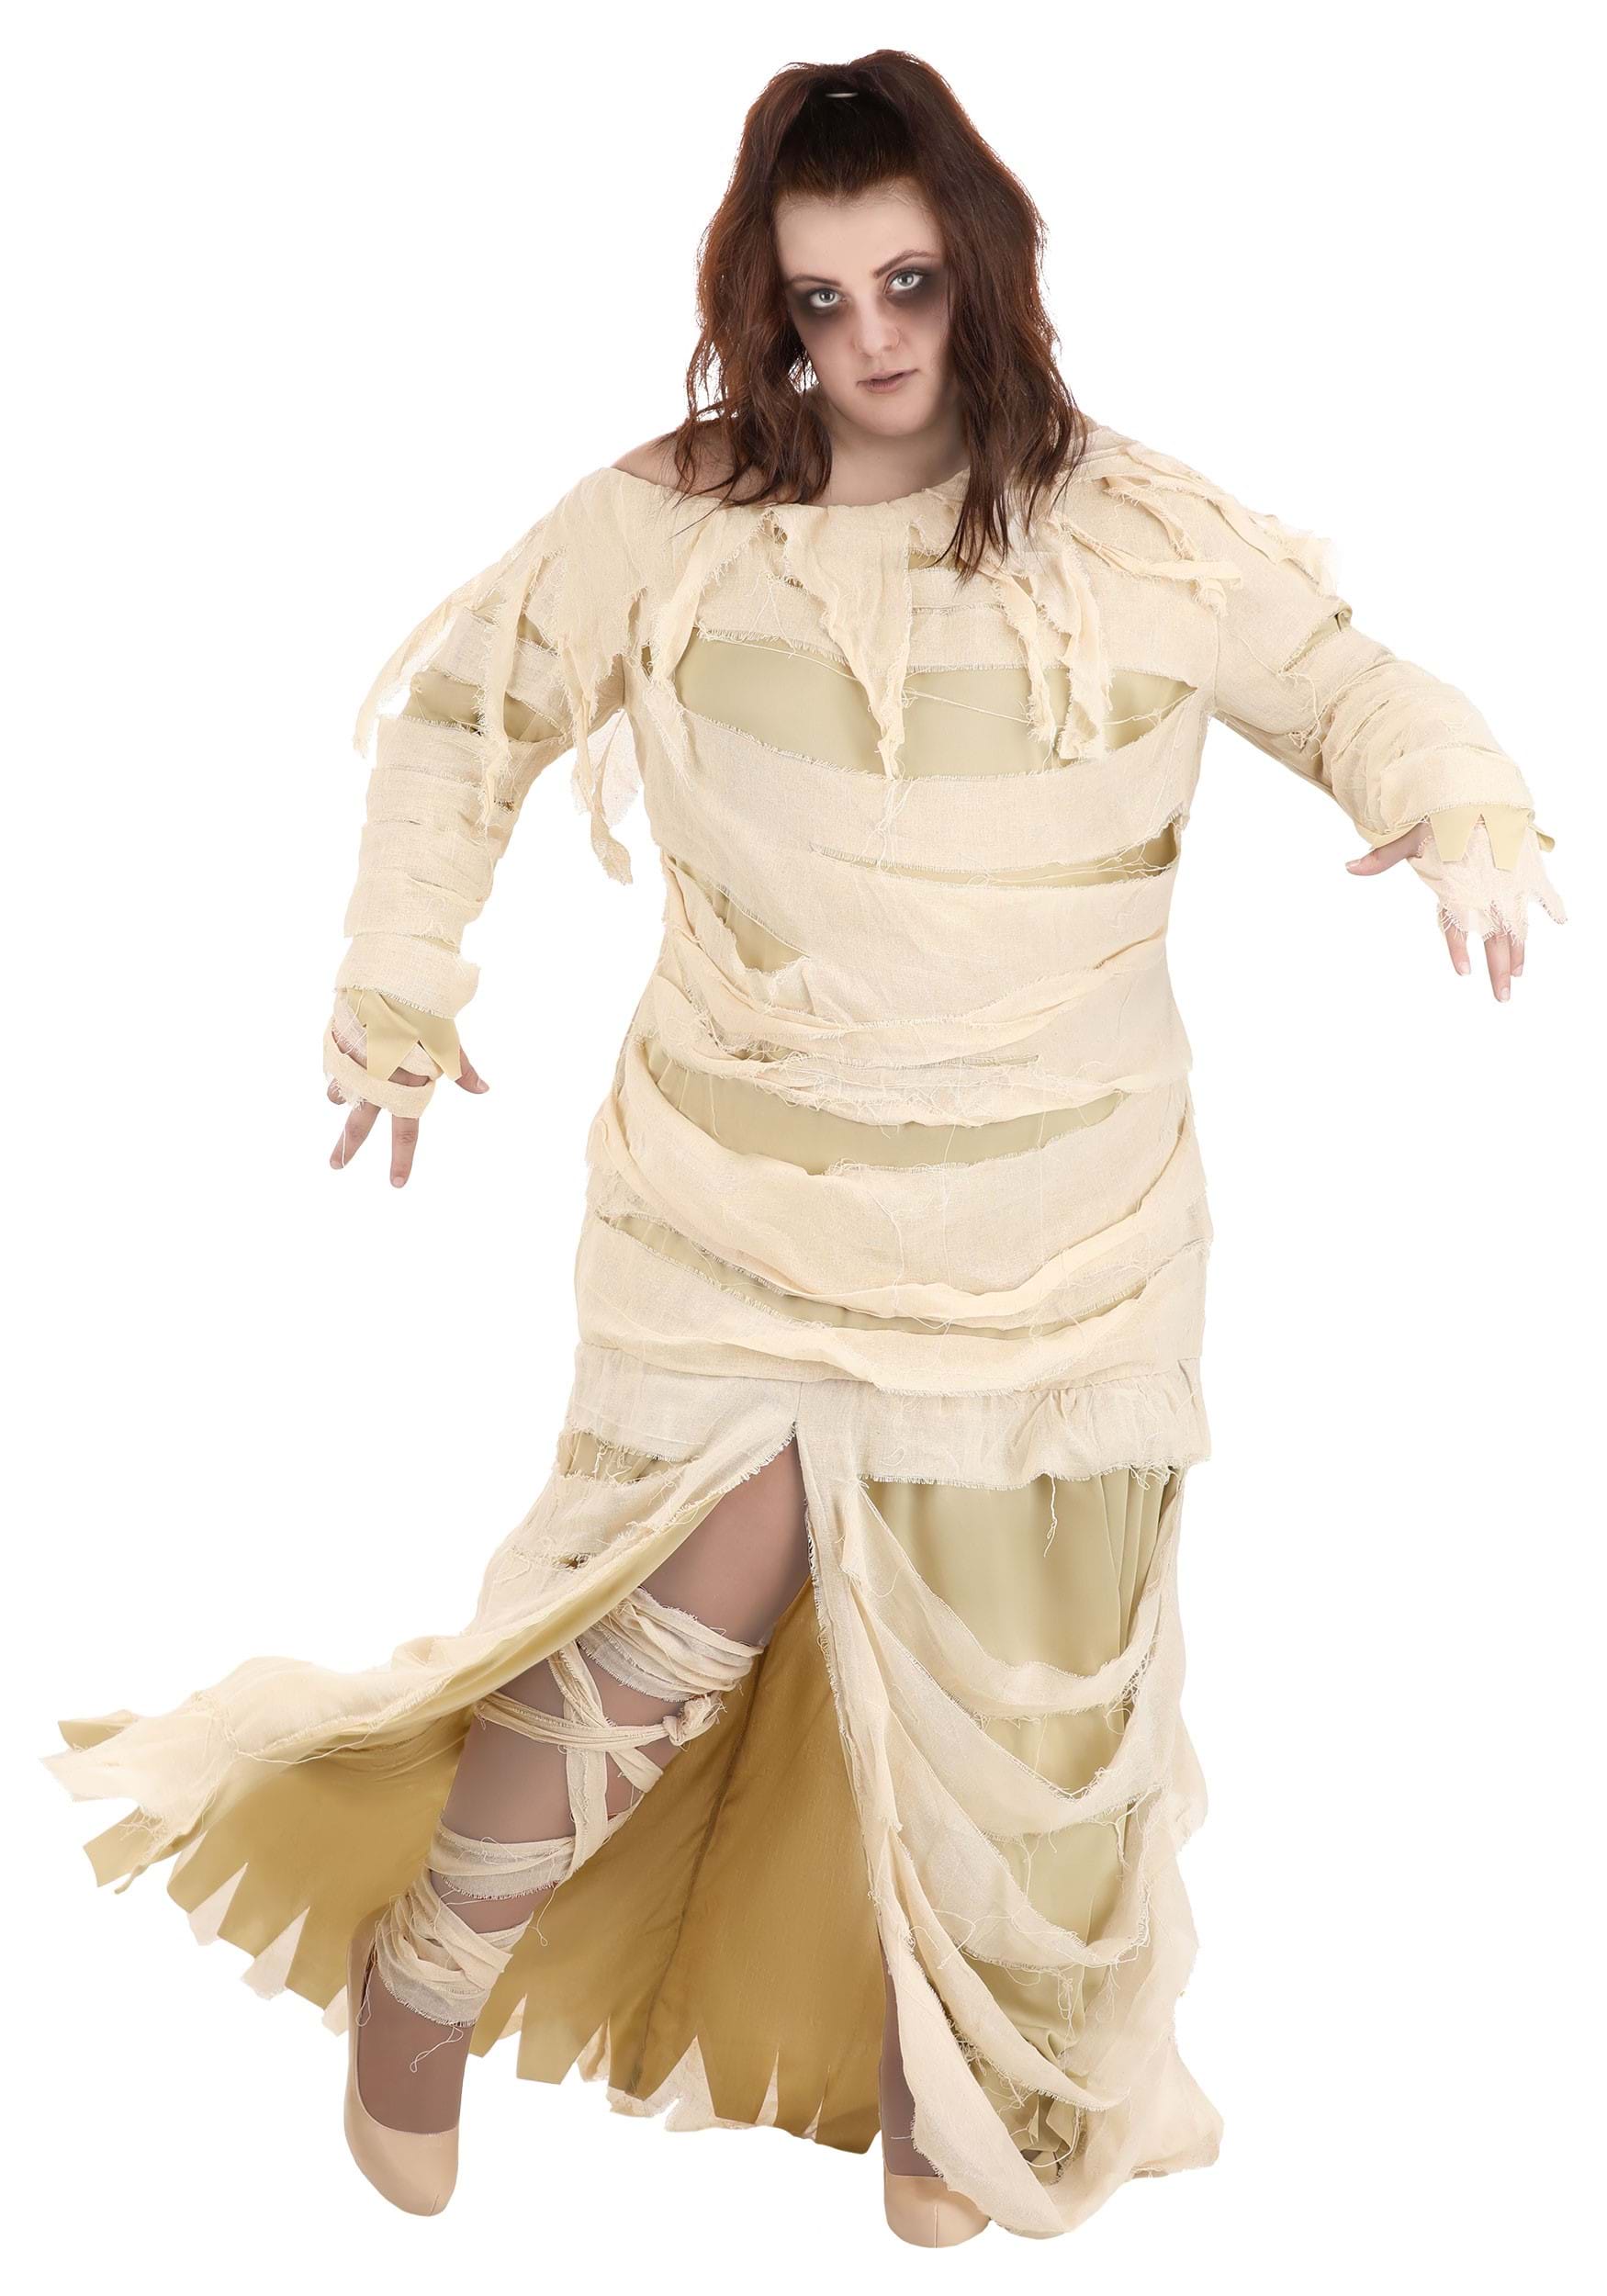 Full Length Mummy Plus Size Costume for Women